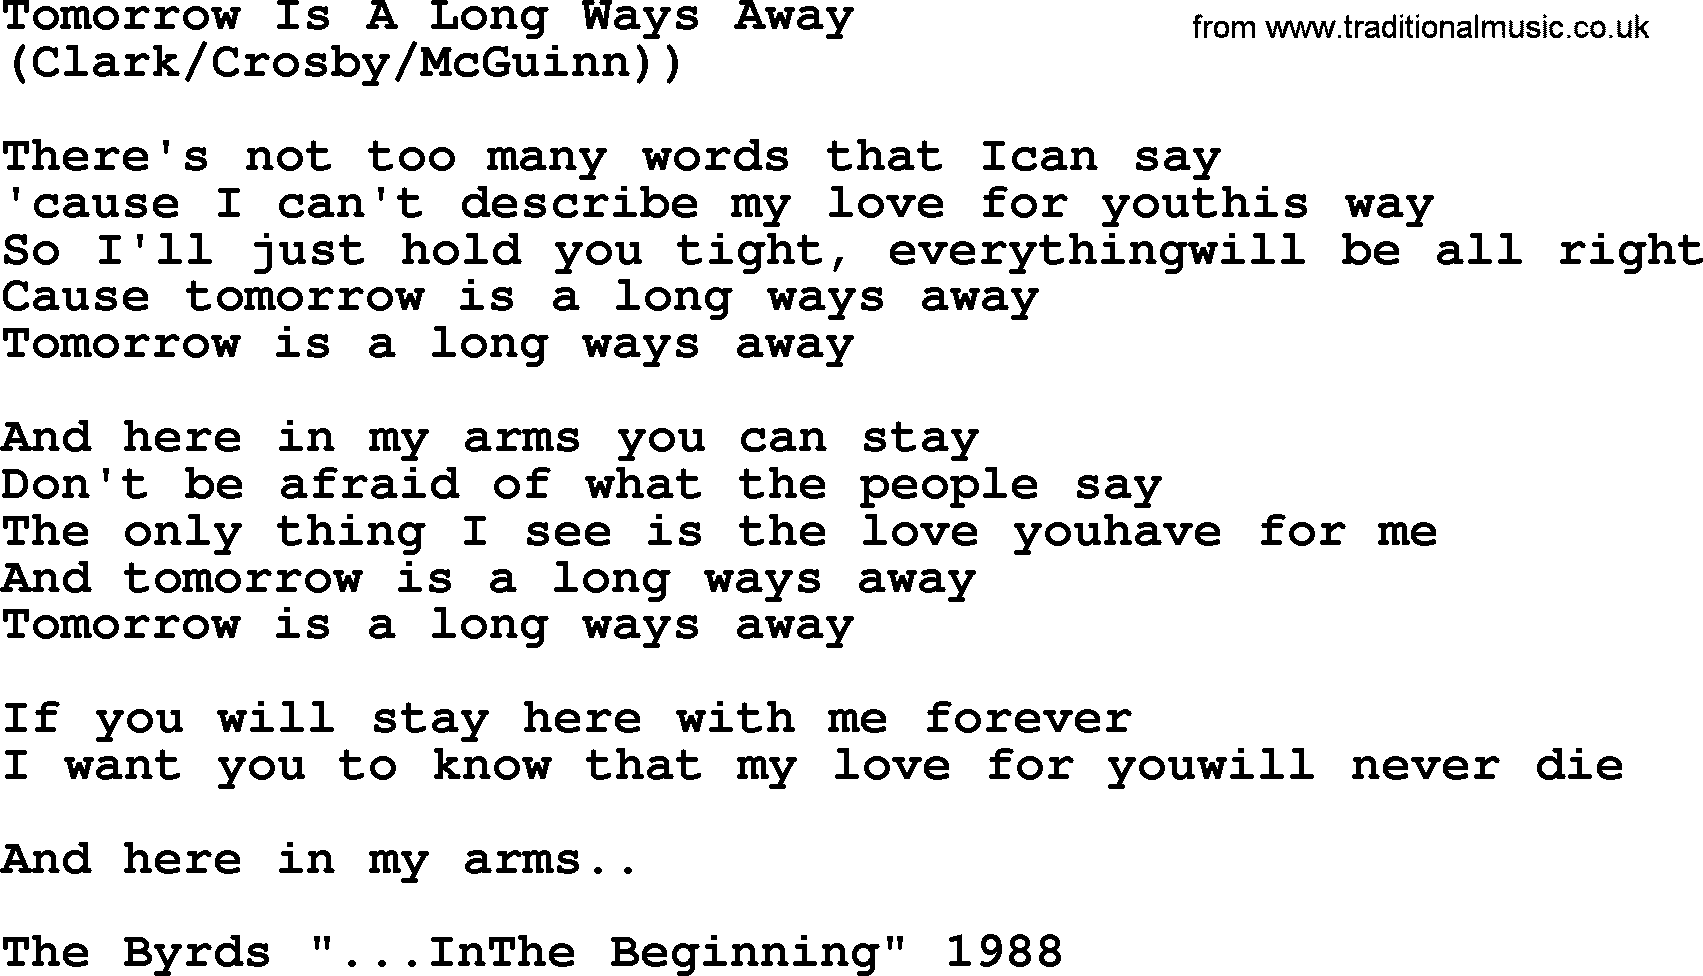 The Byrds song Tomorrow Is A Long Ways Away, lyrics